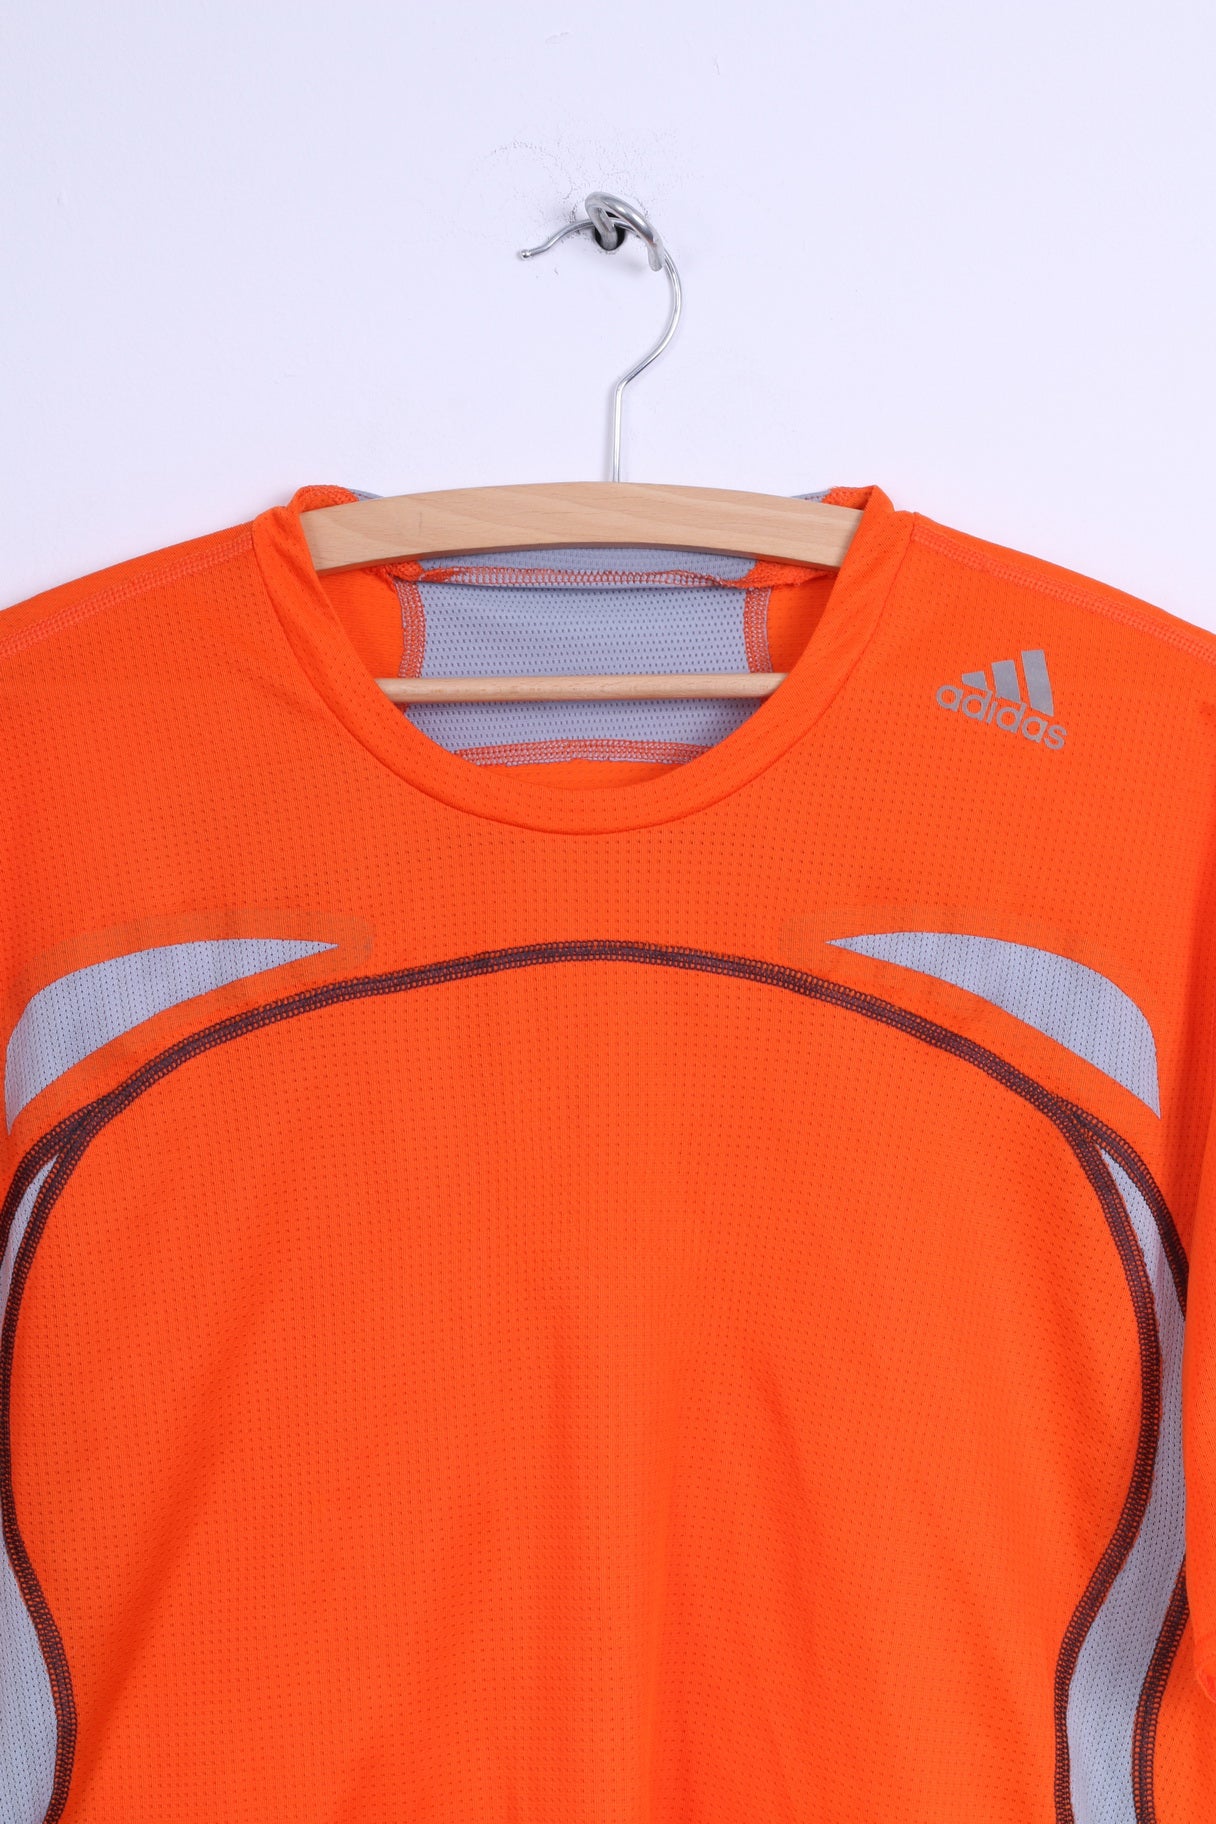 Adidas Mens XL Shirt Orange For Motion Crew Neck 3 Stripe Top Jersey